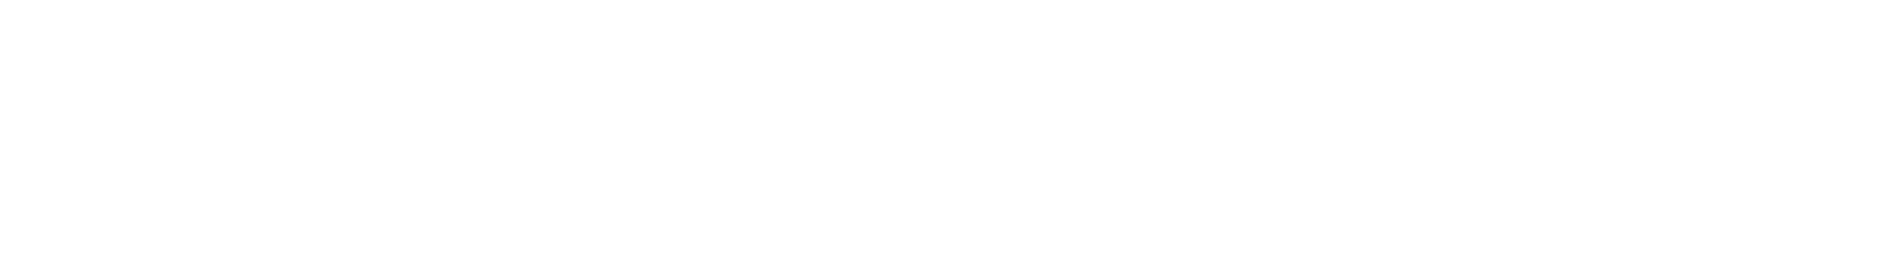 bvlgari-logo-jpg.jpeg